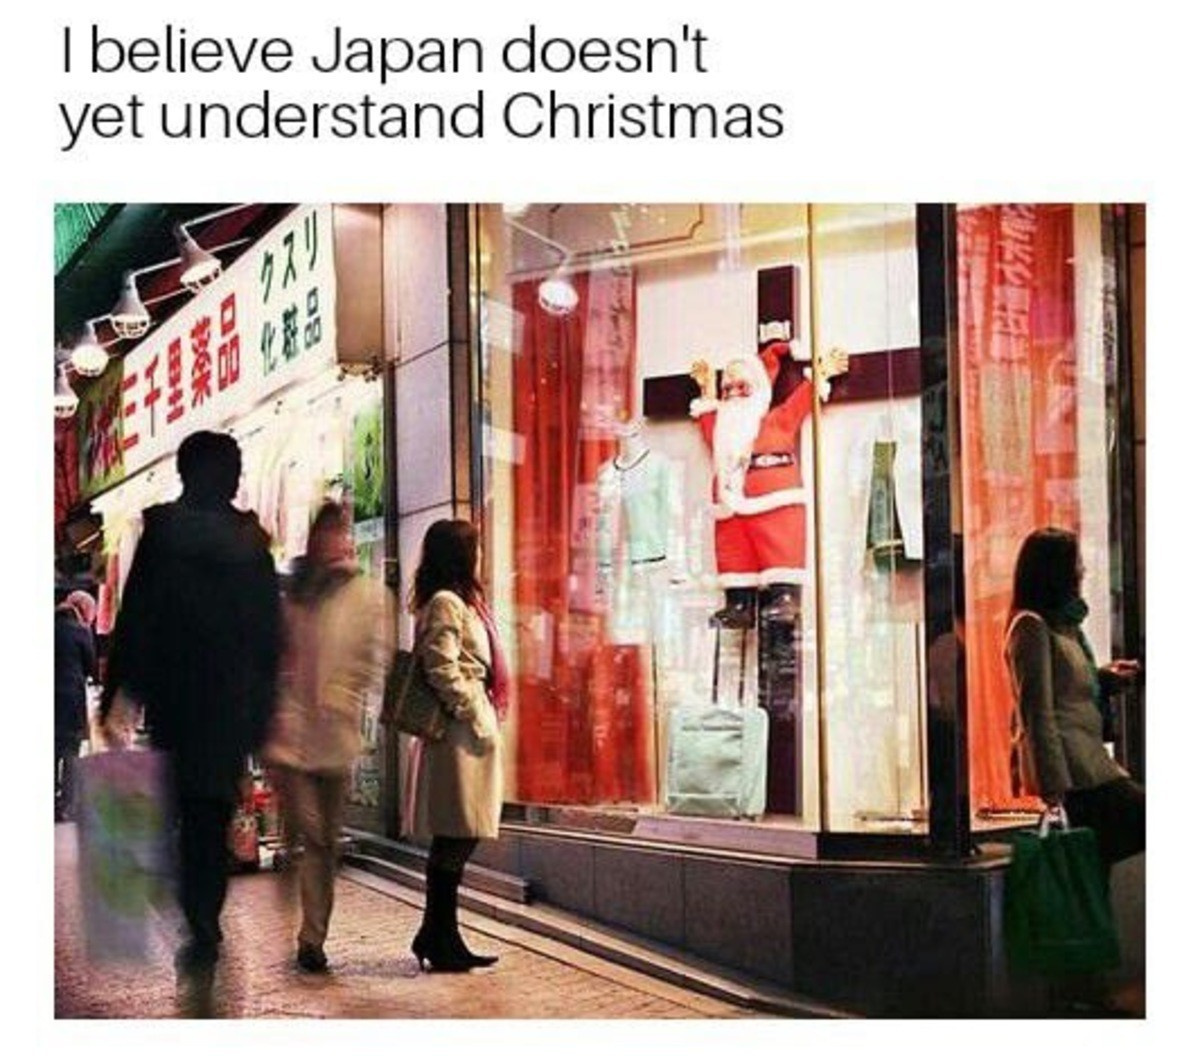 Japan is still learning.